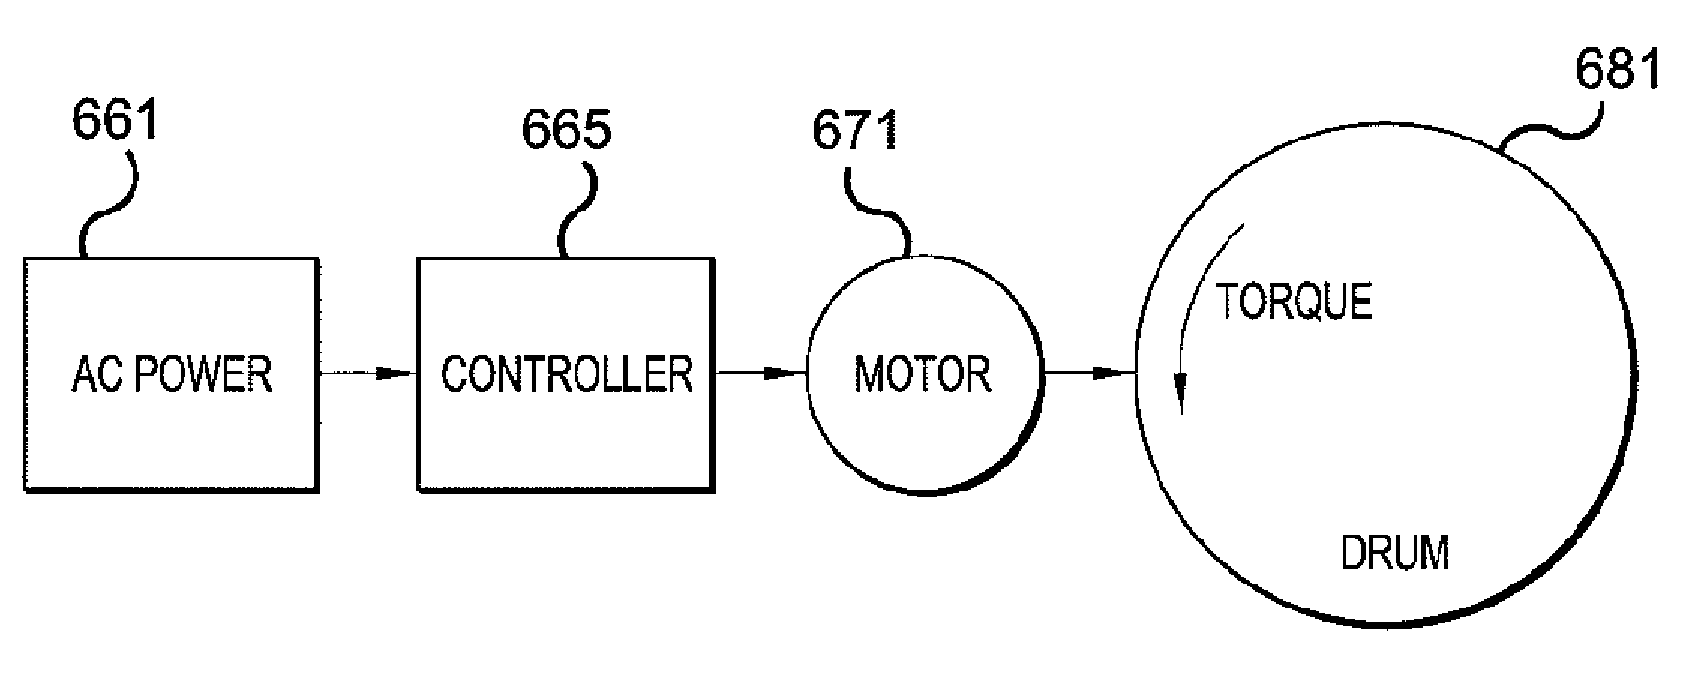 Open loop method for controlling power